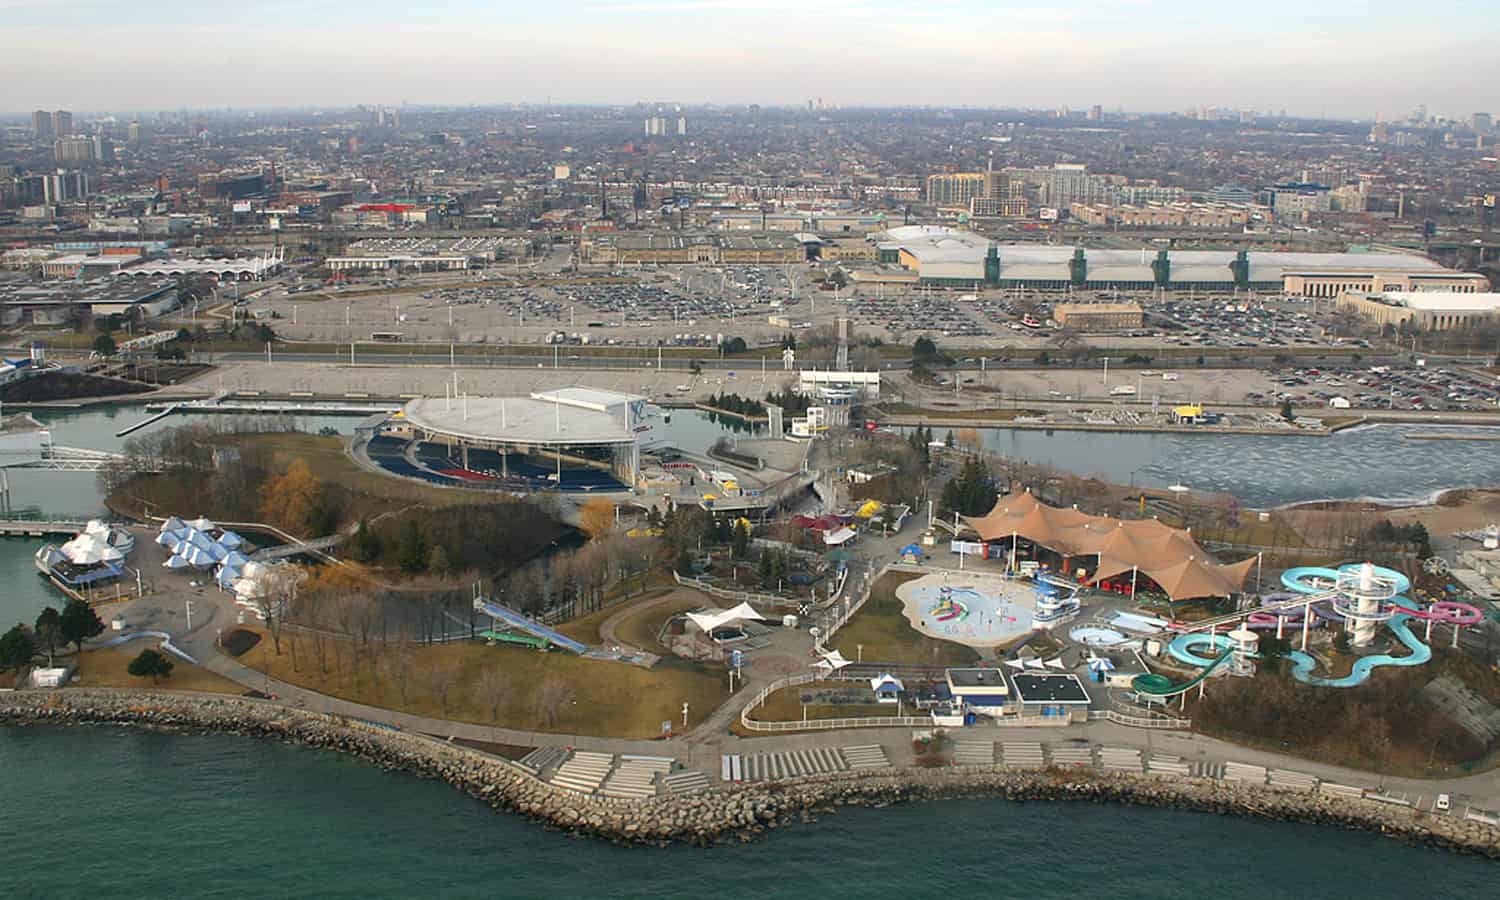 Molson Amphitheatre and Ontario Place waterpark - Wikipedia